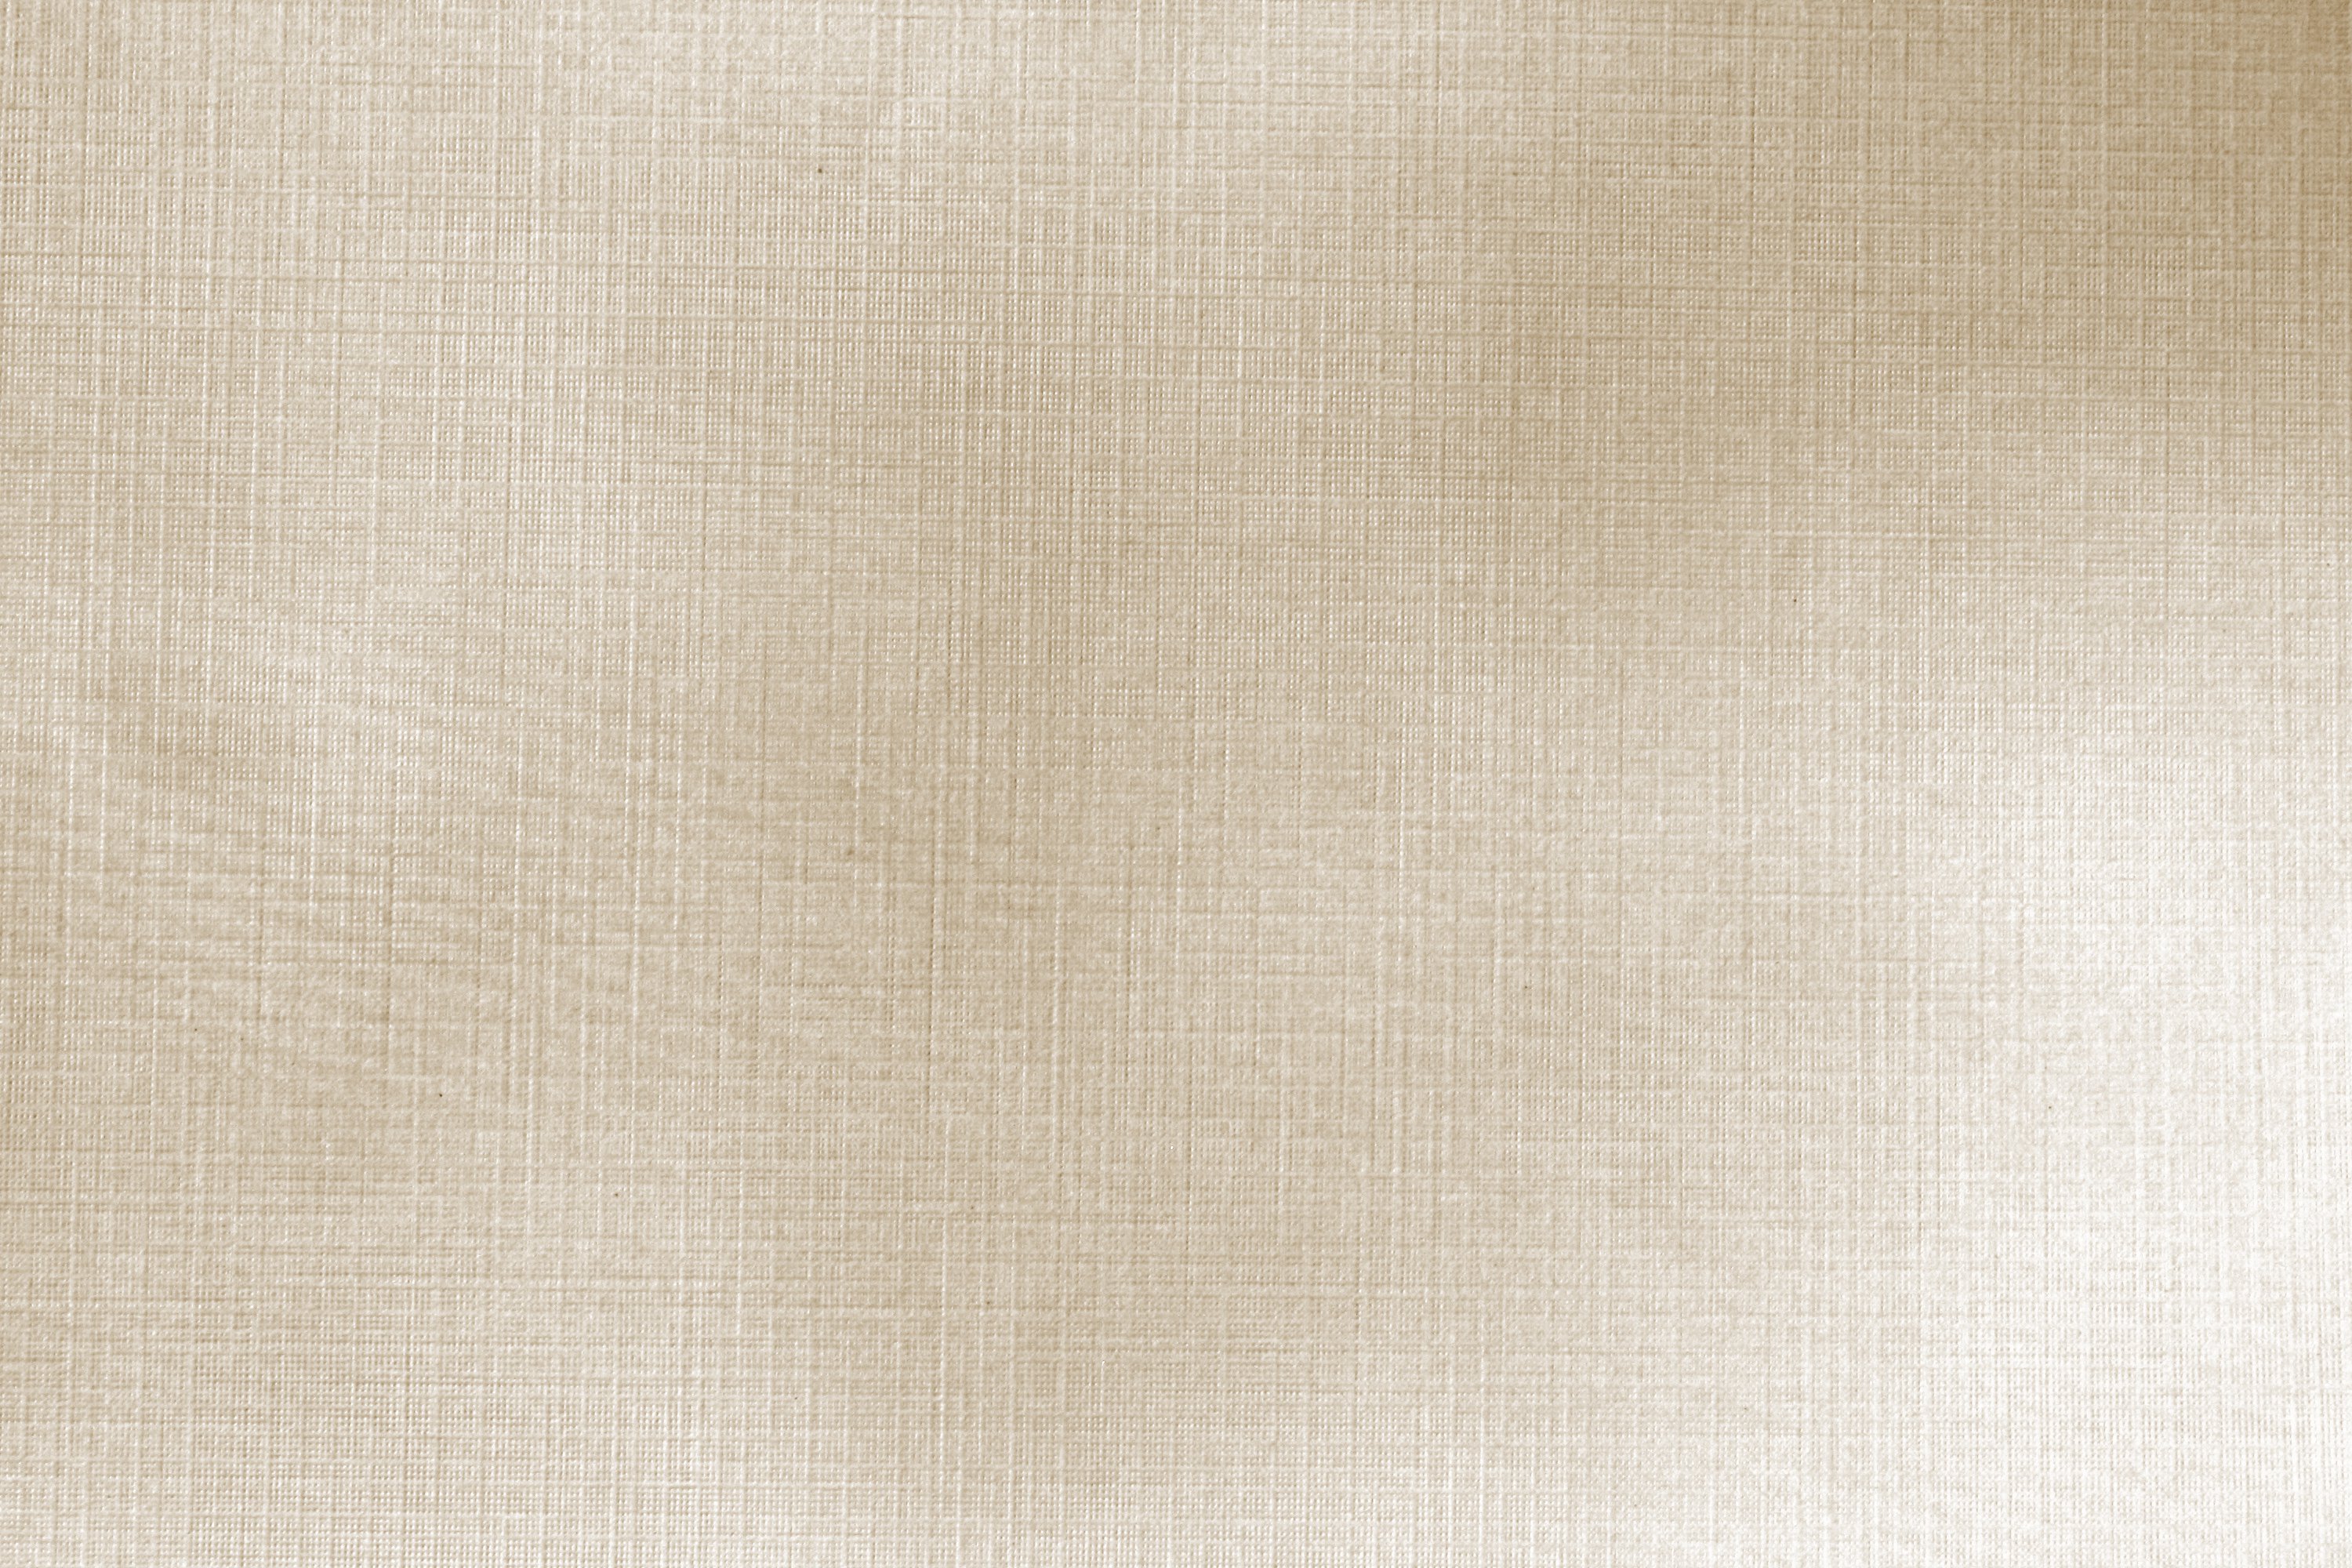 294825288  Chiniile Grey Linen Texture Wallpaper  by AStreet Prints